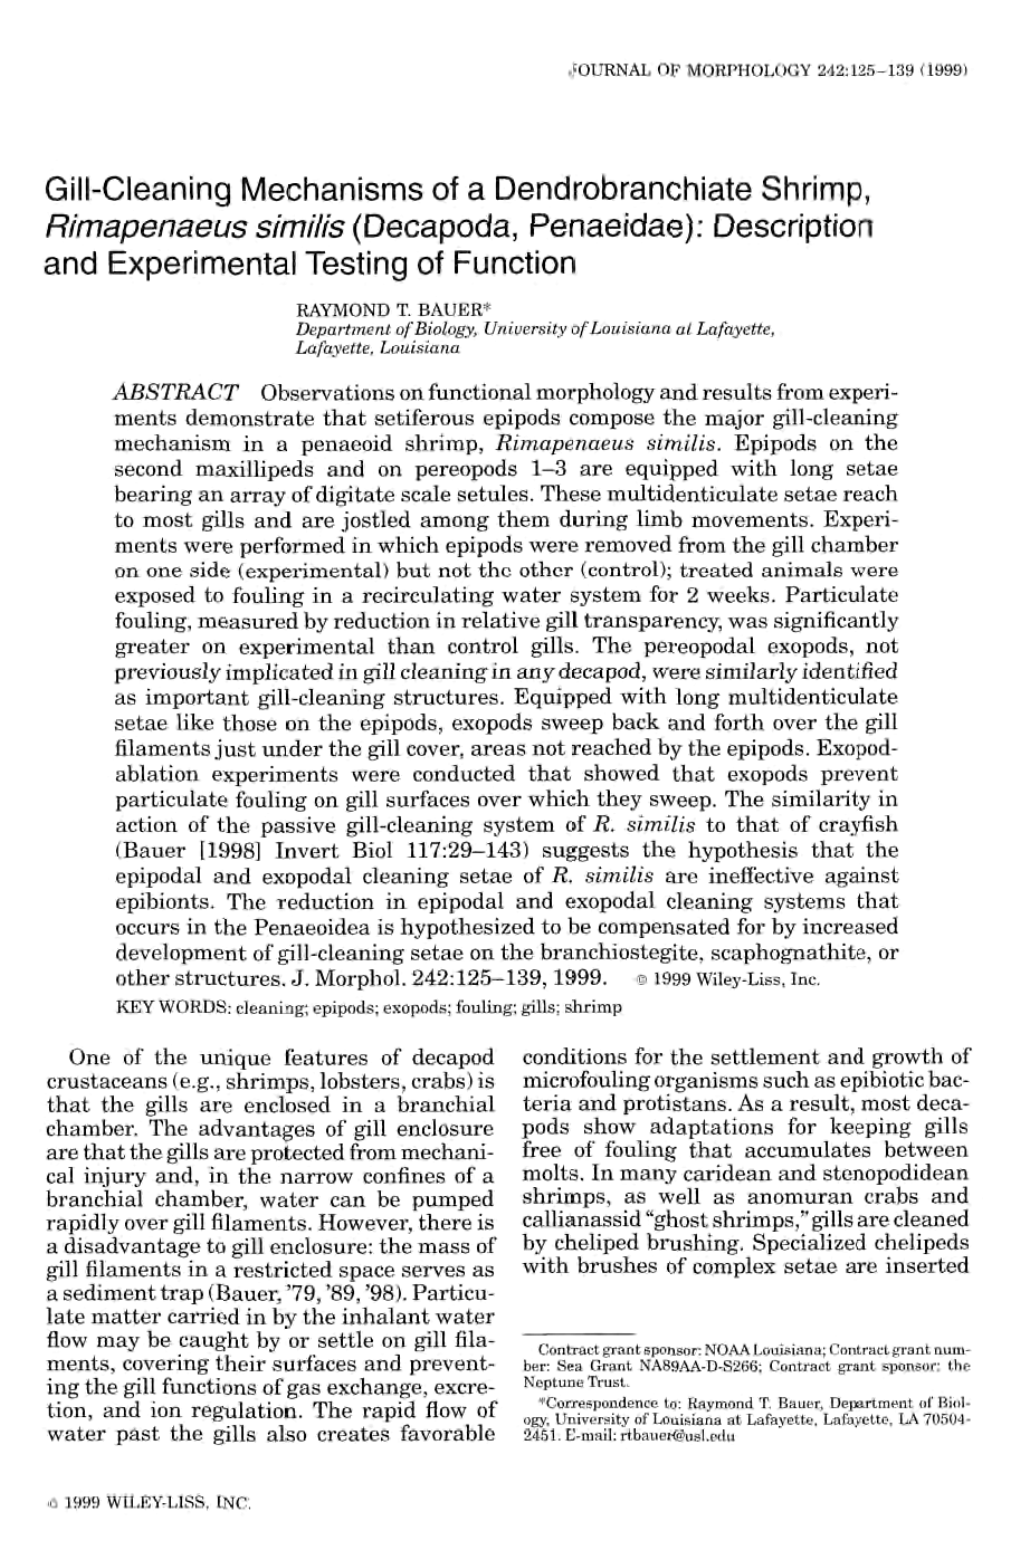 Gill-Cleaning Mechanisms of a Dendrobranchiate Shrimp, Rimapenaeus Similis (Decapoda, Penaeidae): Description and Experimental Testing of Function